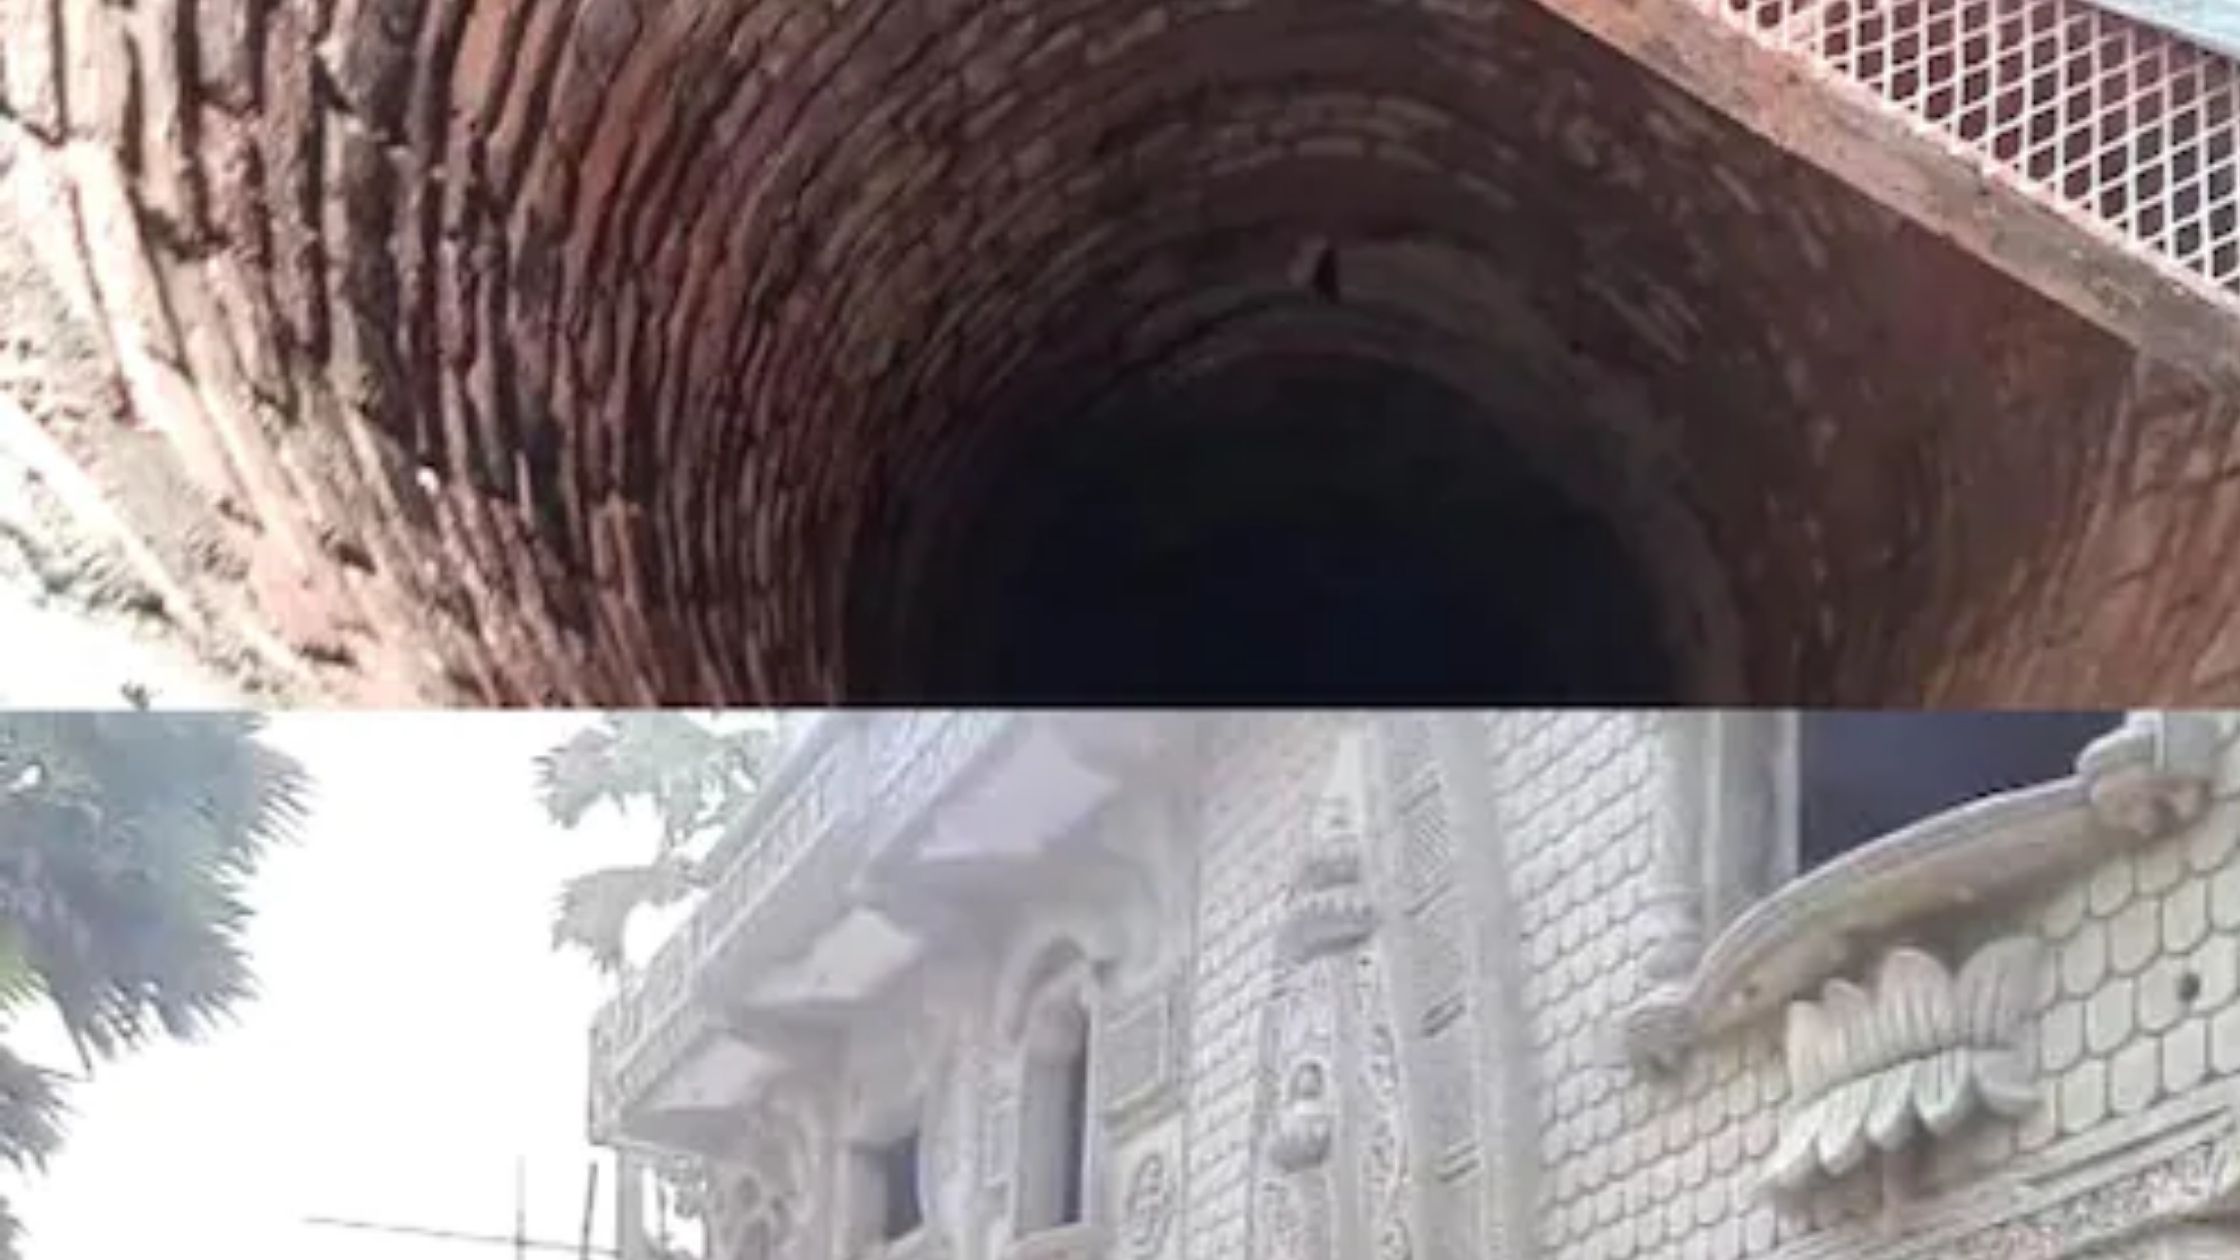 Sweet water well is located in Thakurbari of Shri Radhe Krishna temple in Bakhtiyarpur of Patna district